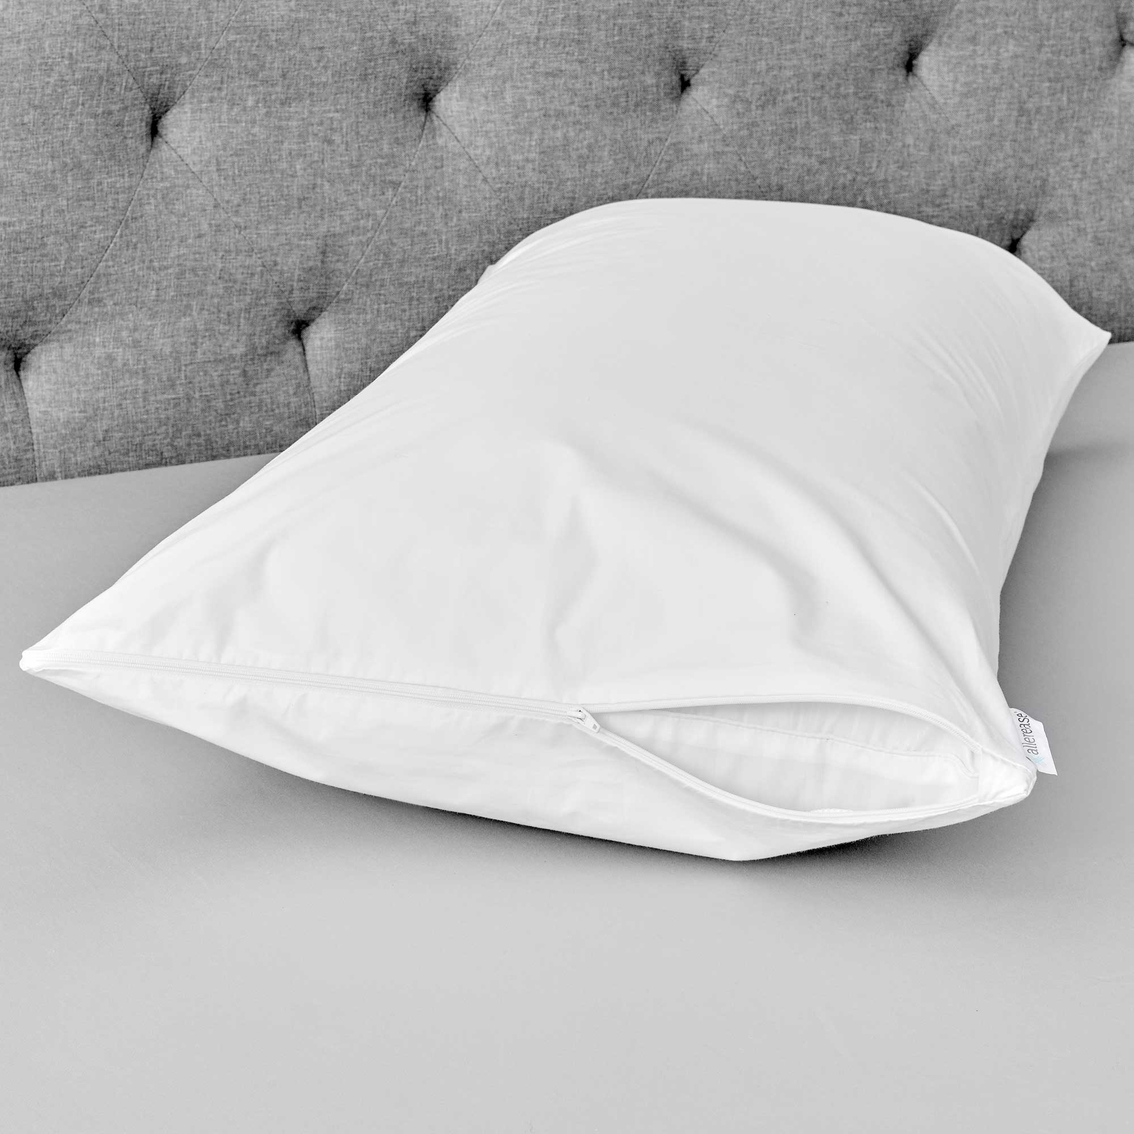 AllerEase Waterproof Pillow Protector - Image 3 of 5